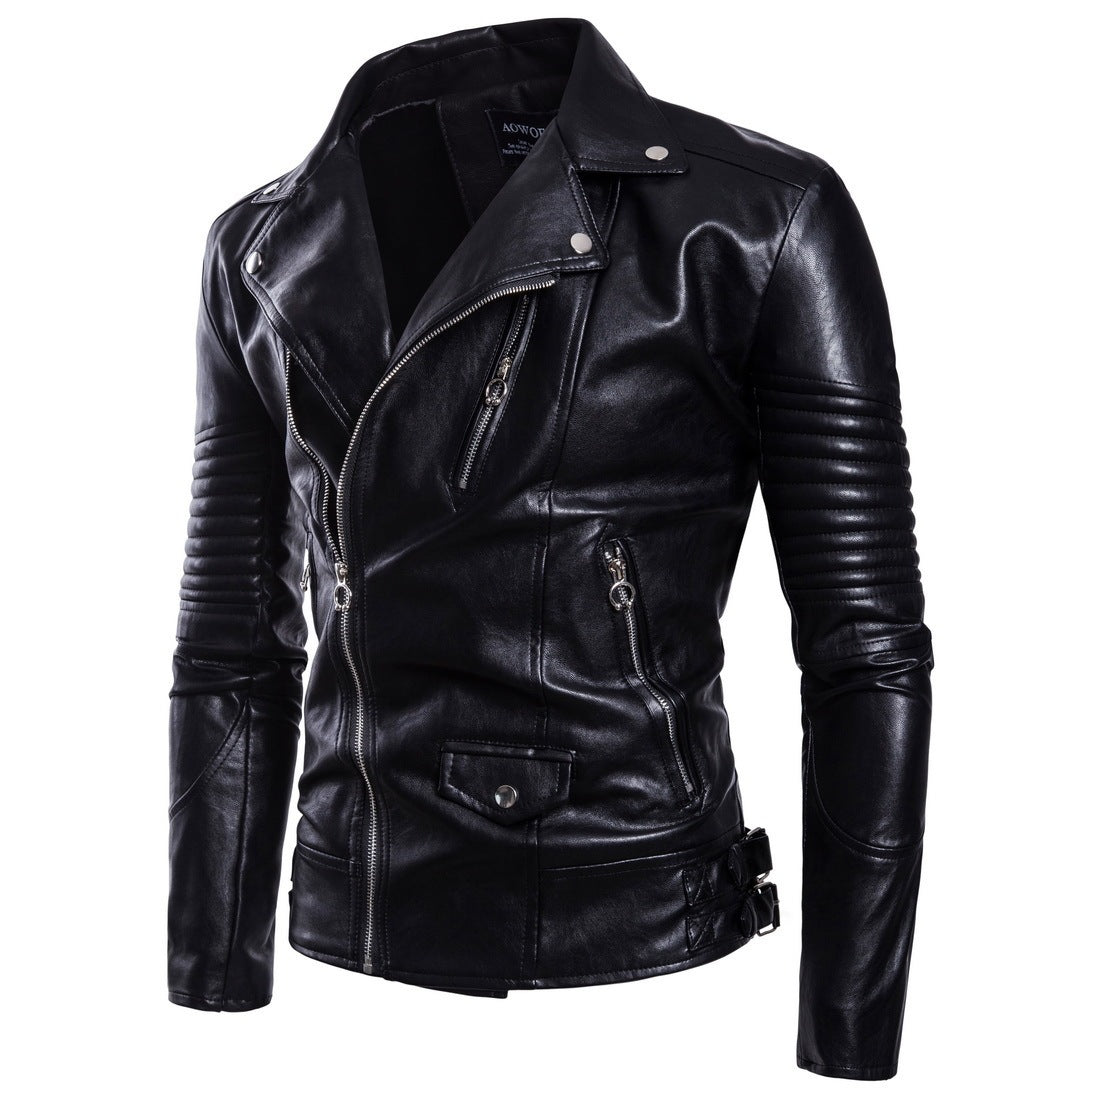 Leather jacket "Biker style" 